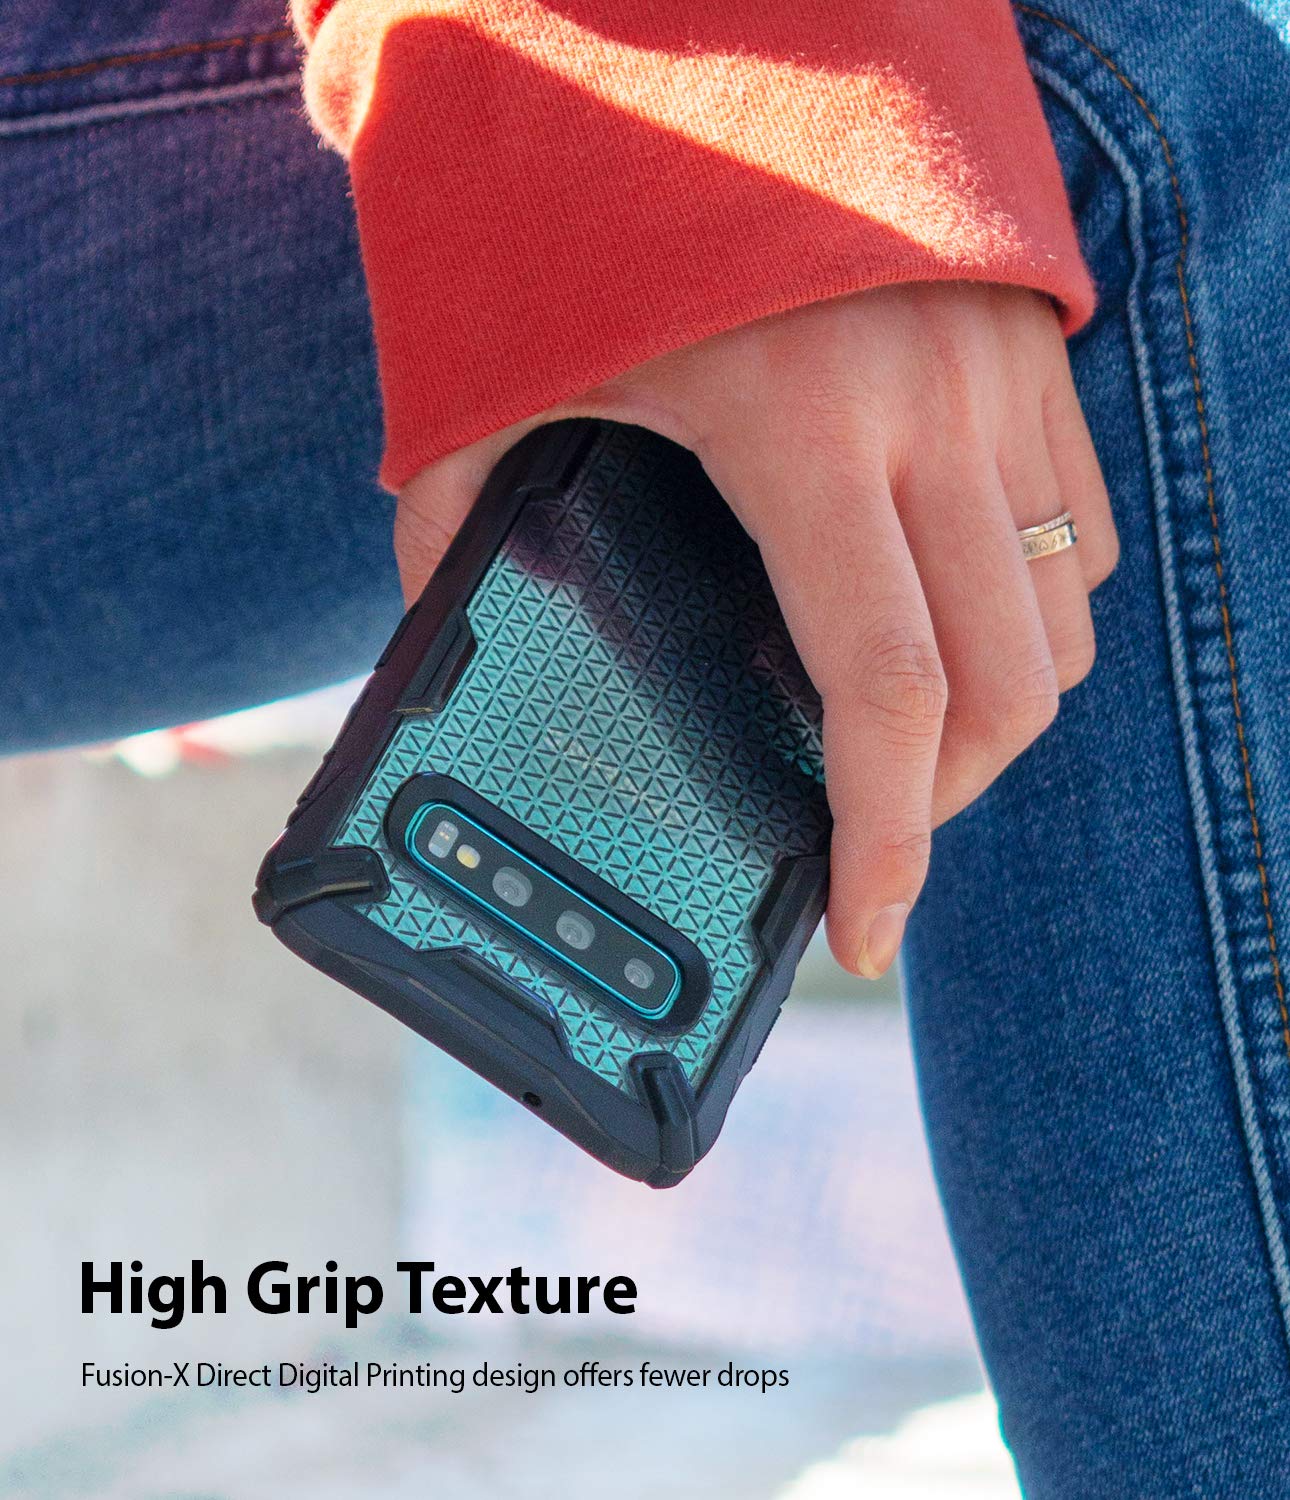 high grip texture ergonomic grip